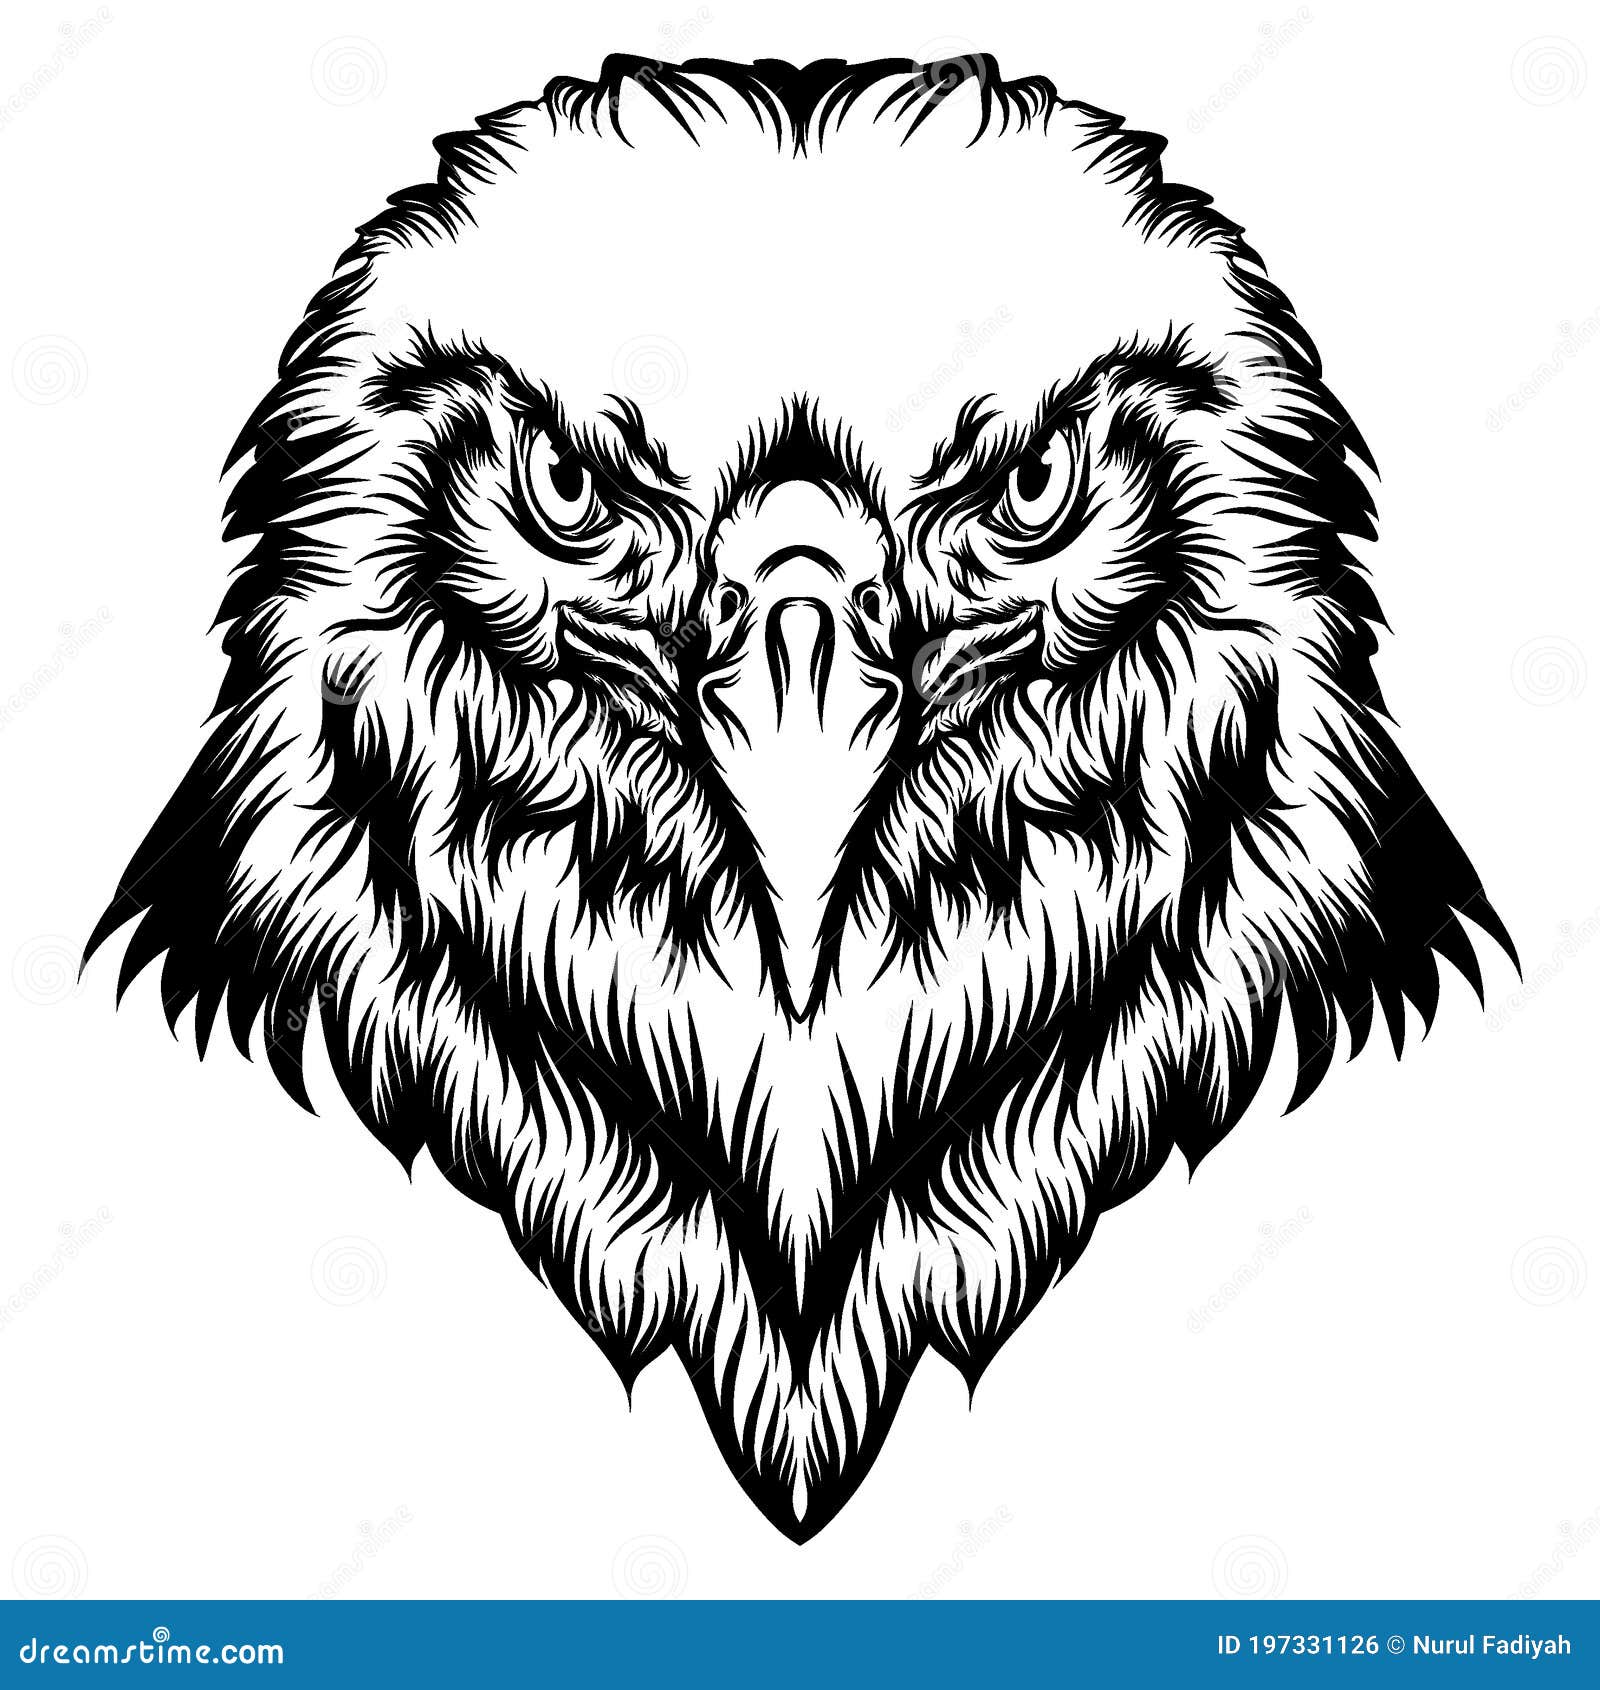 El Vector Logo águila Para Tatuaje O T-Shirt Design O Estilo De Caza Eagle  De Este Dibujo Es De Tela Negra O El Lienzo Imagen Vector De Stock Alamy |  